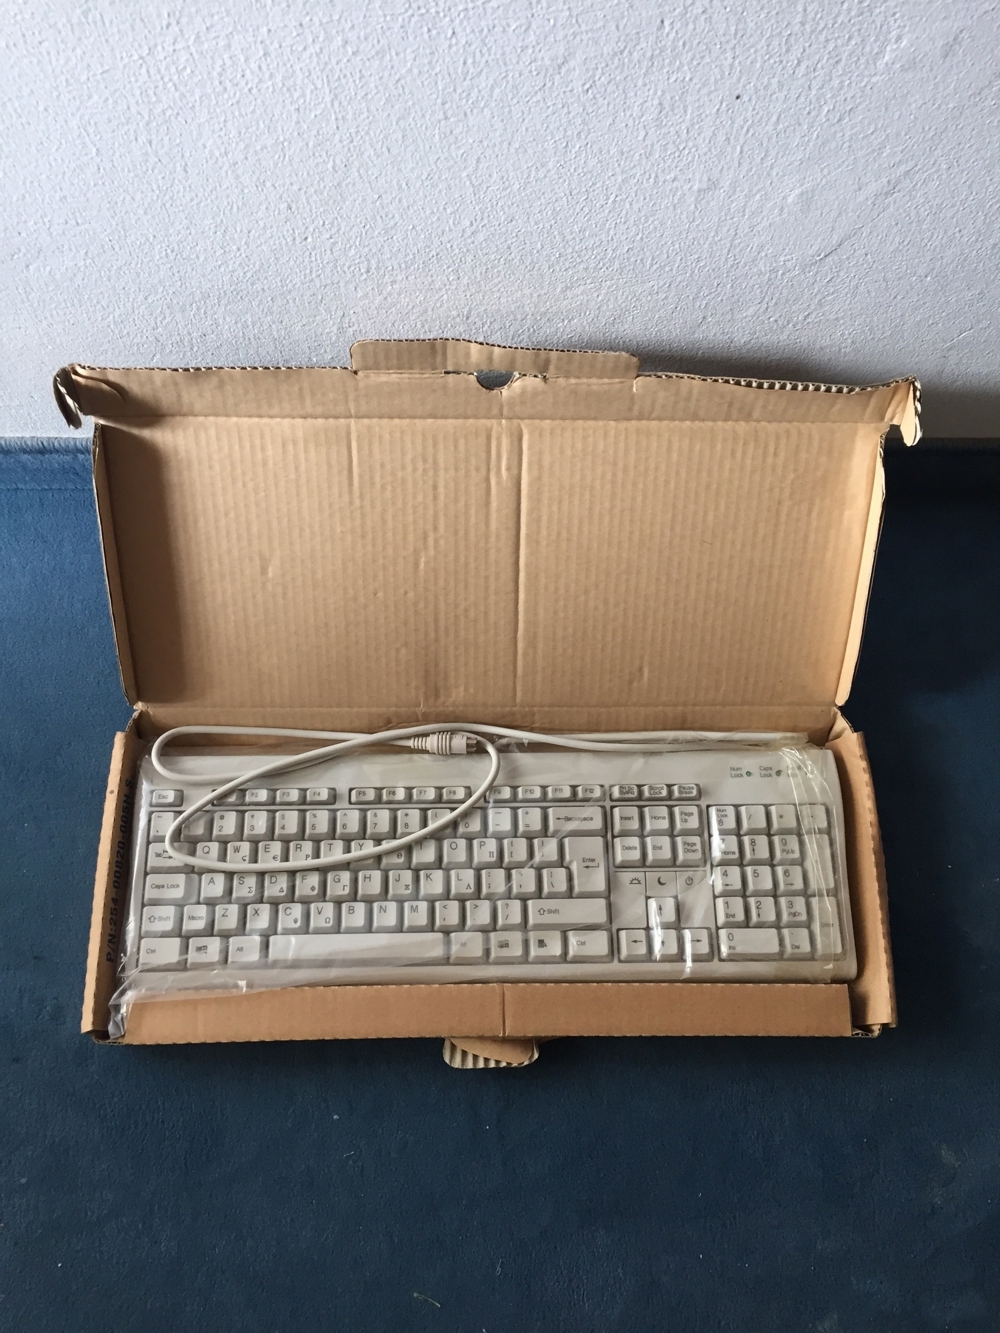 Tastatur Original Windows Tastatur neu !